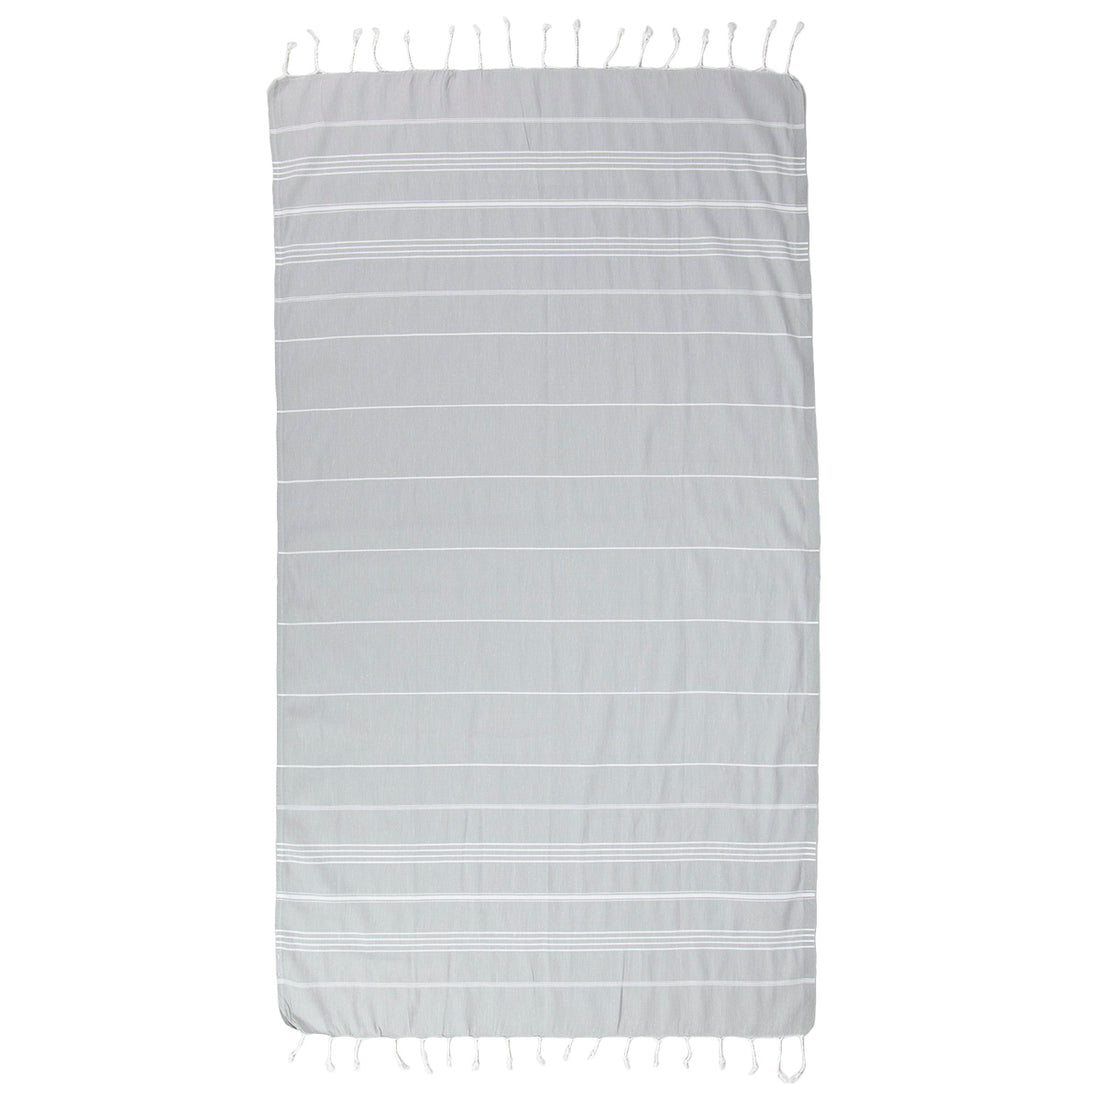 Grey and White Thin Turkish Towel